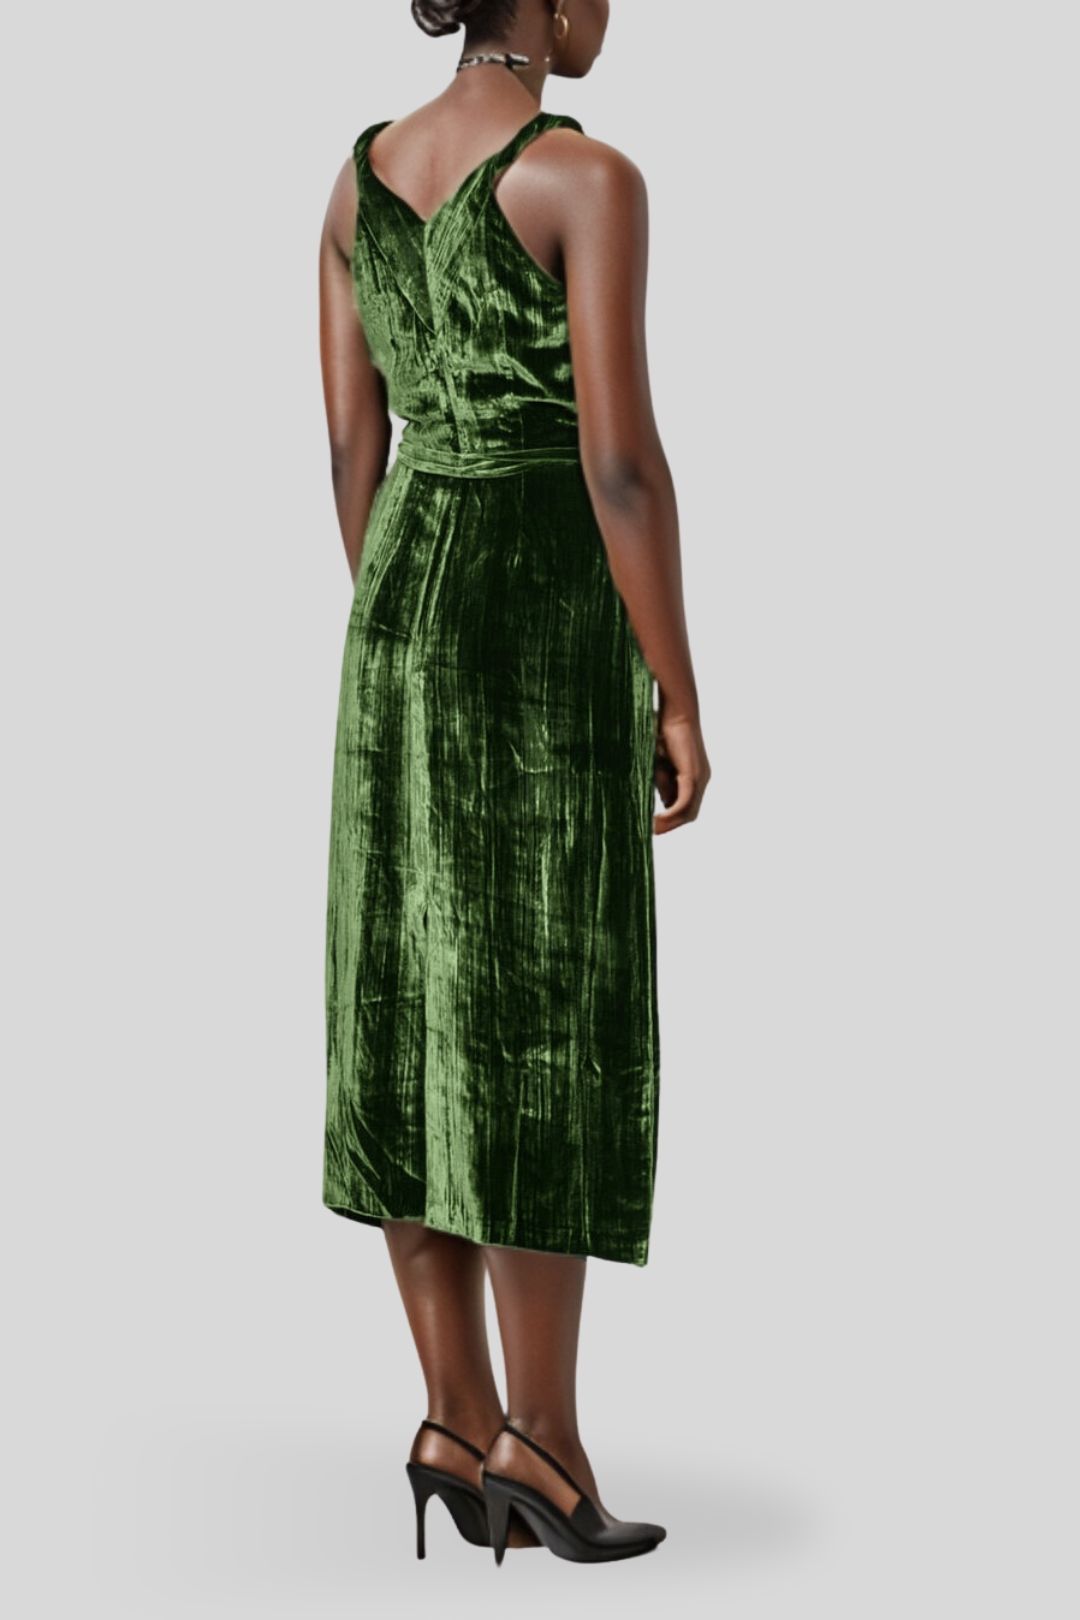 Veronika Maine - Crushed Velvet Dress Green Midi